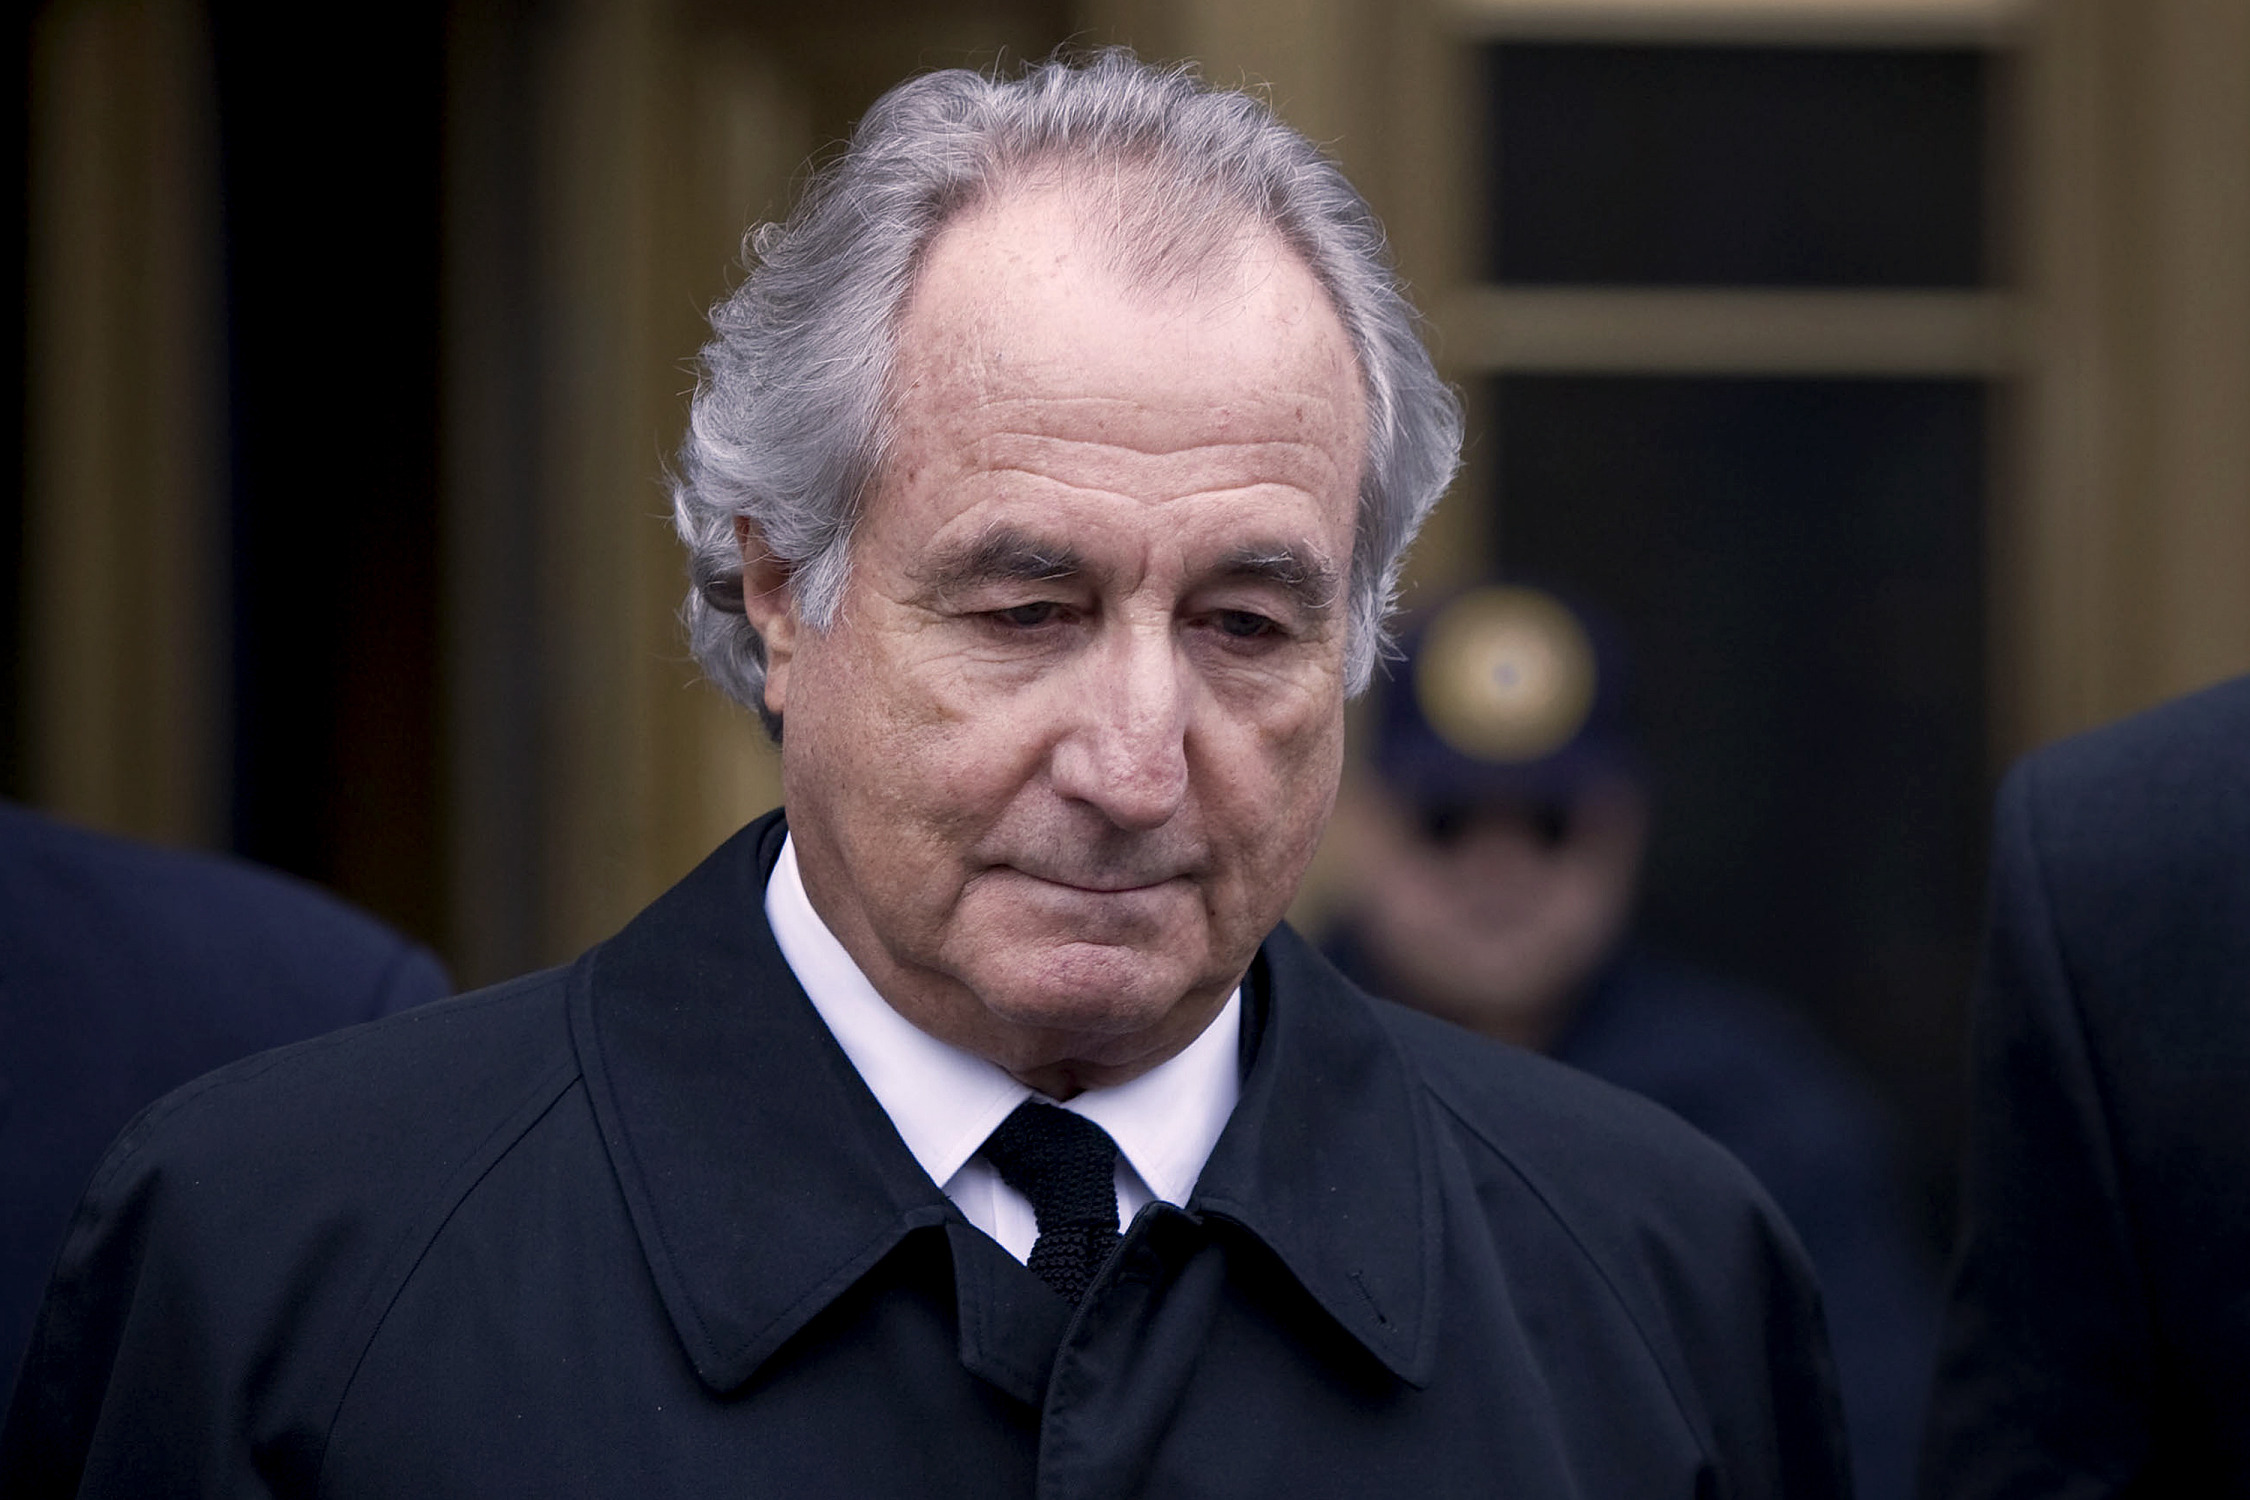 Bernard Madoff net worth, children, Ponzi scheme and whereabouts 